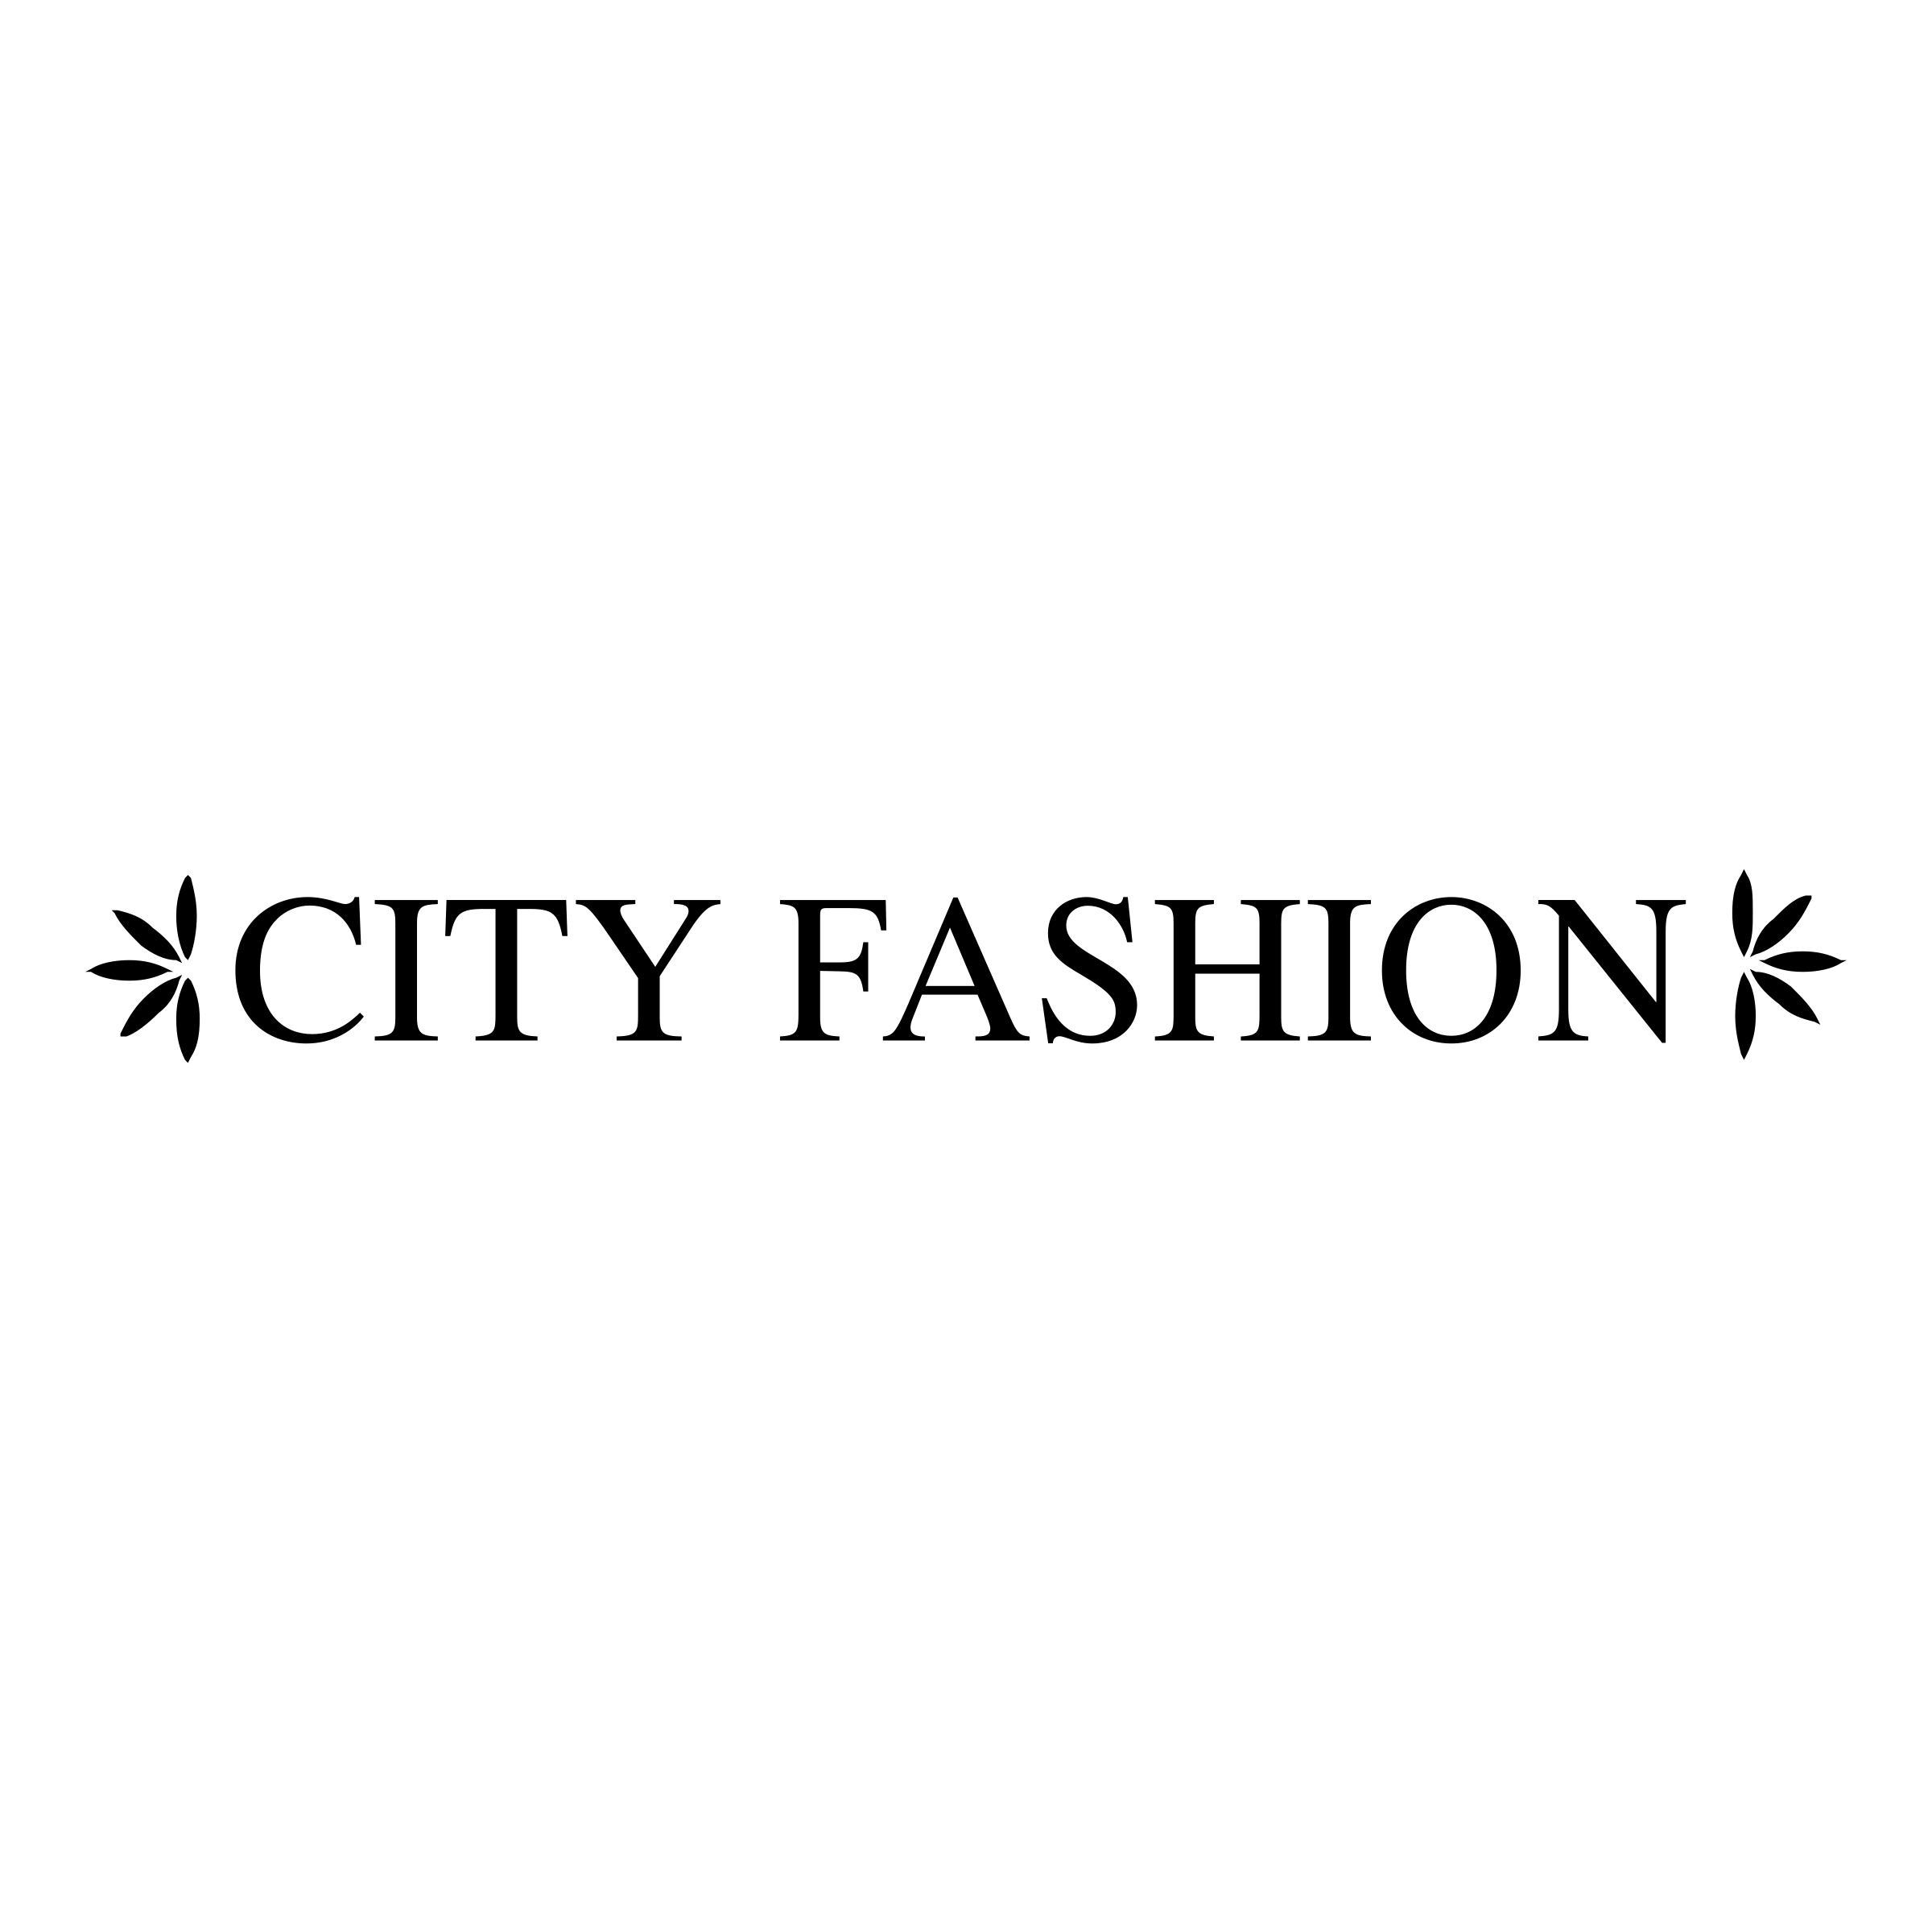 Transparent Fashion Logo - City Fashion Logo PNG Transparent & SVG Vector